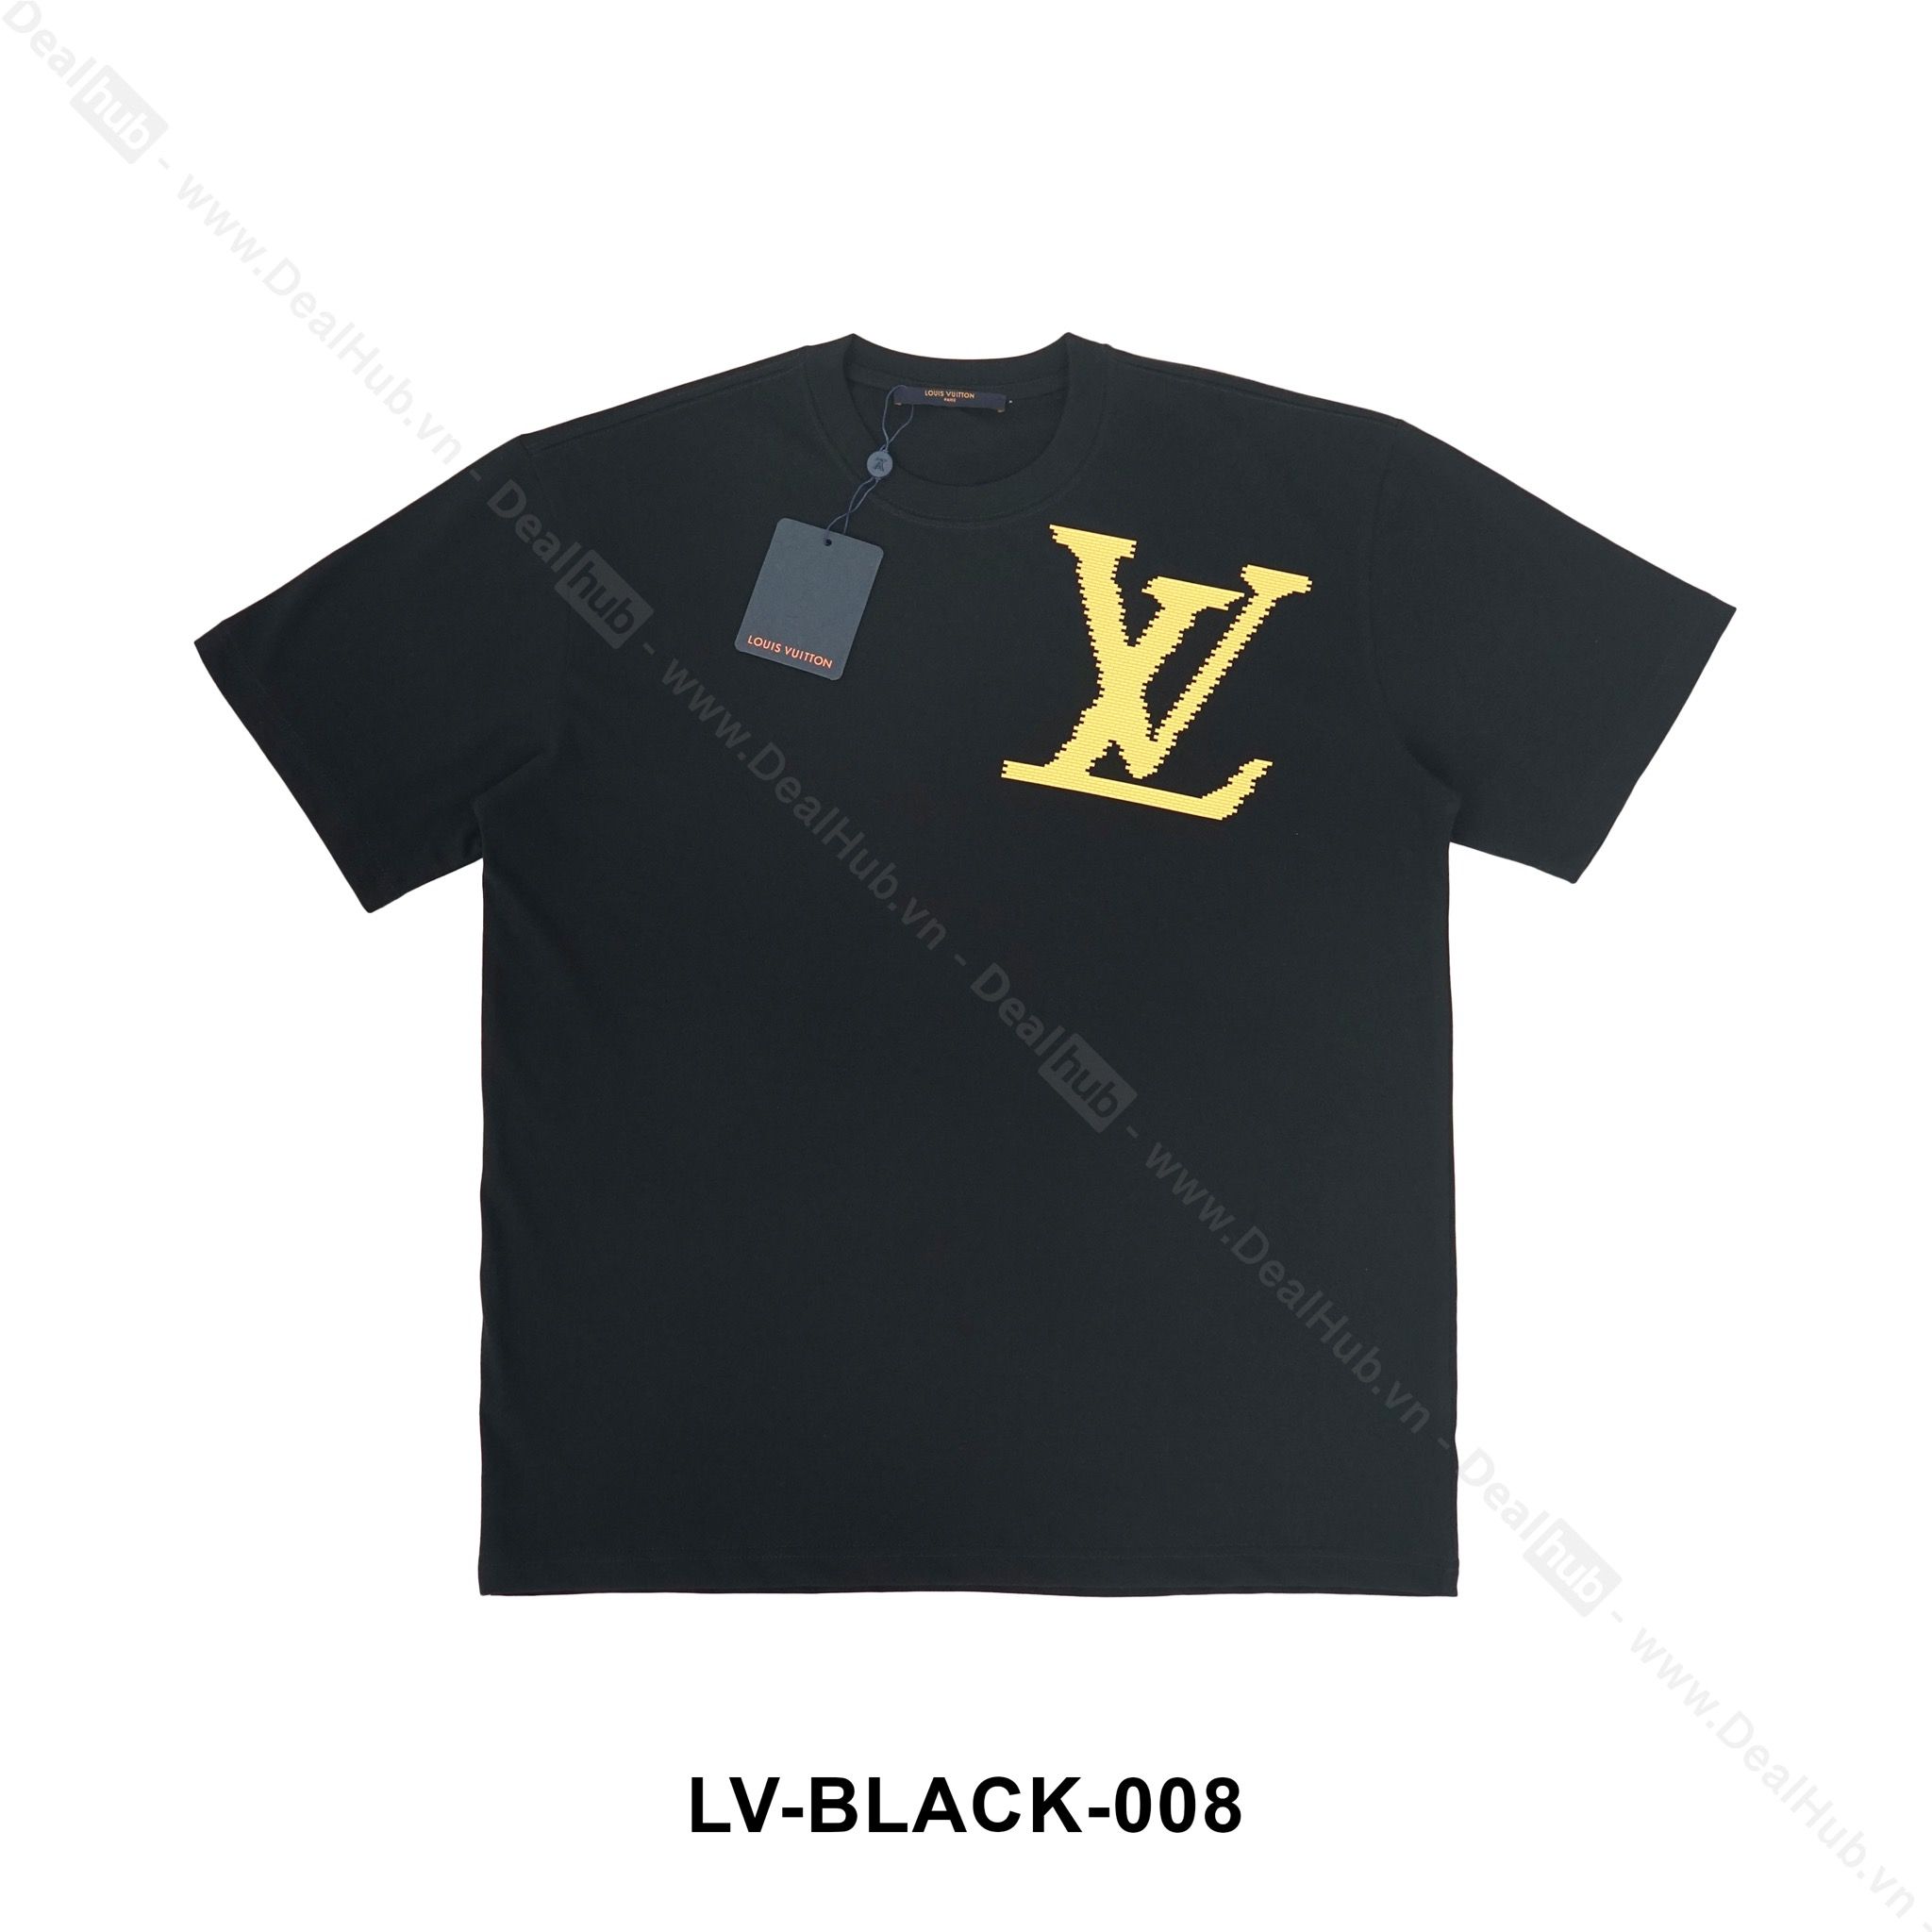 T-shirt Louis Vuitton Grey size M International in Cotton - 25367801